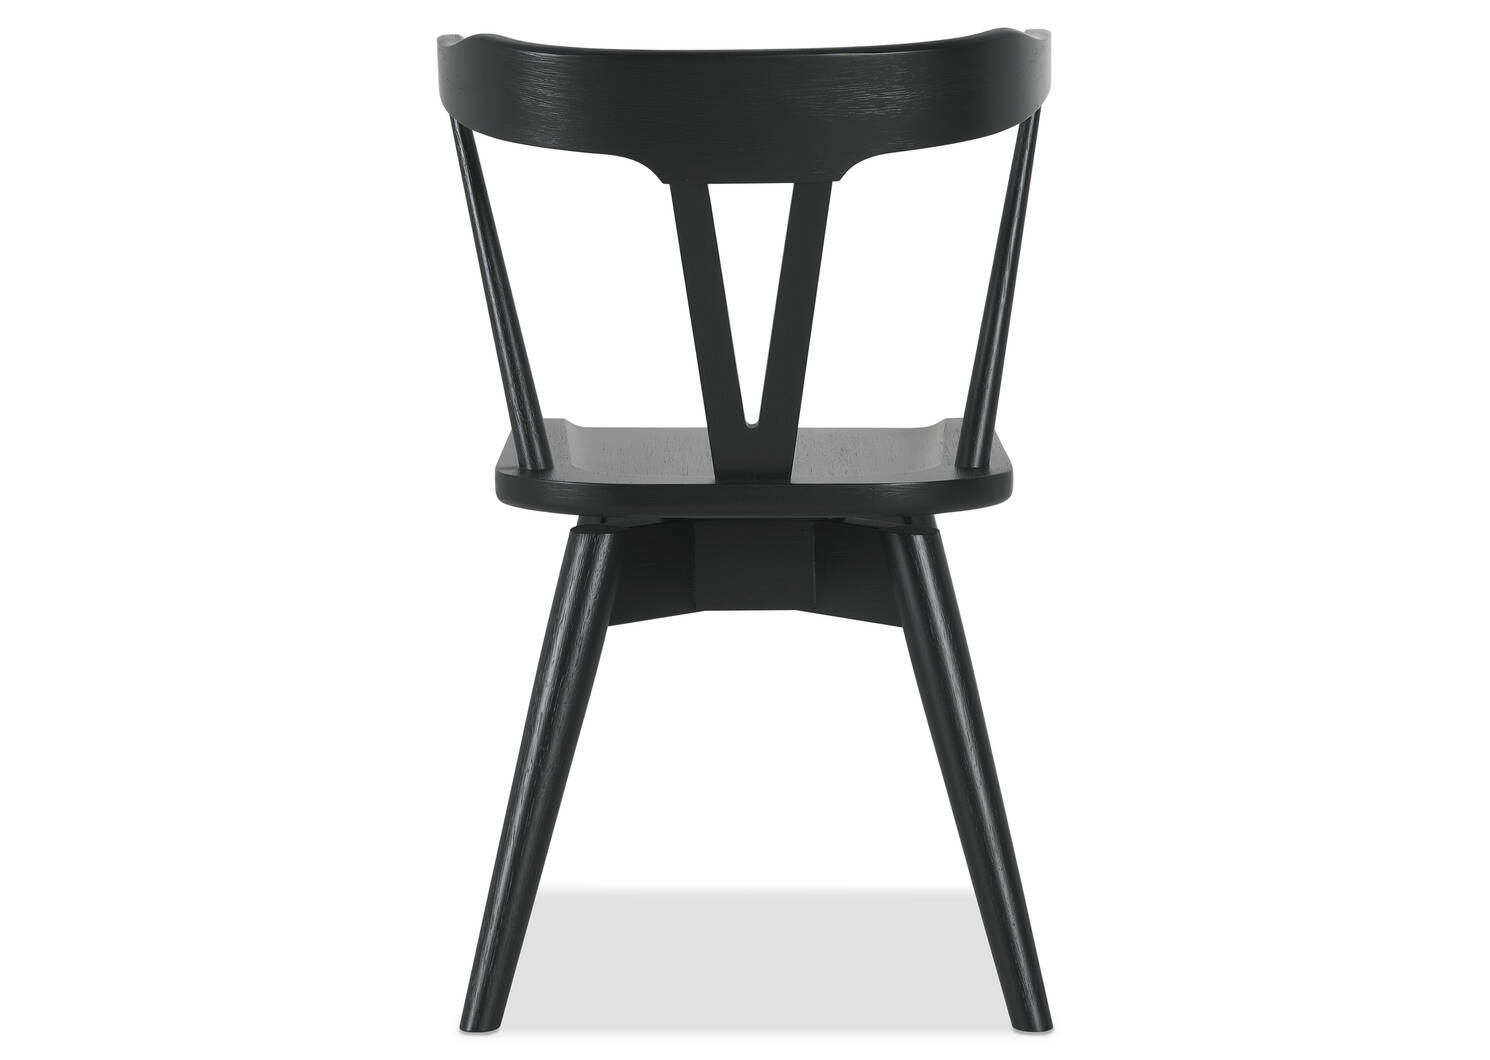 Tolbert Swivel Dining Chair -Mesa Black